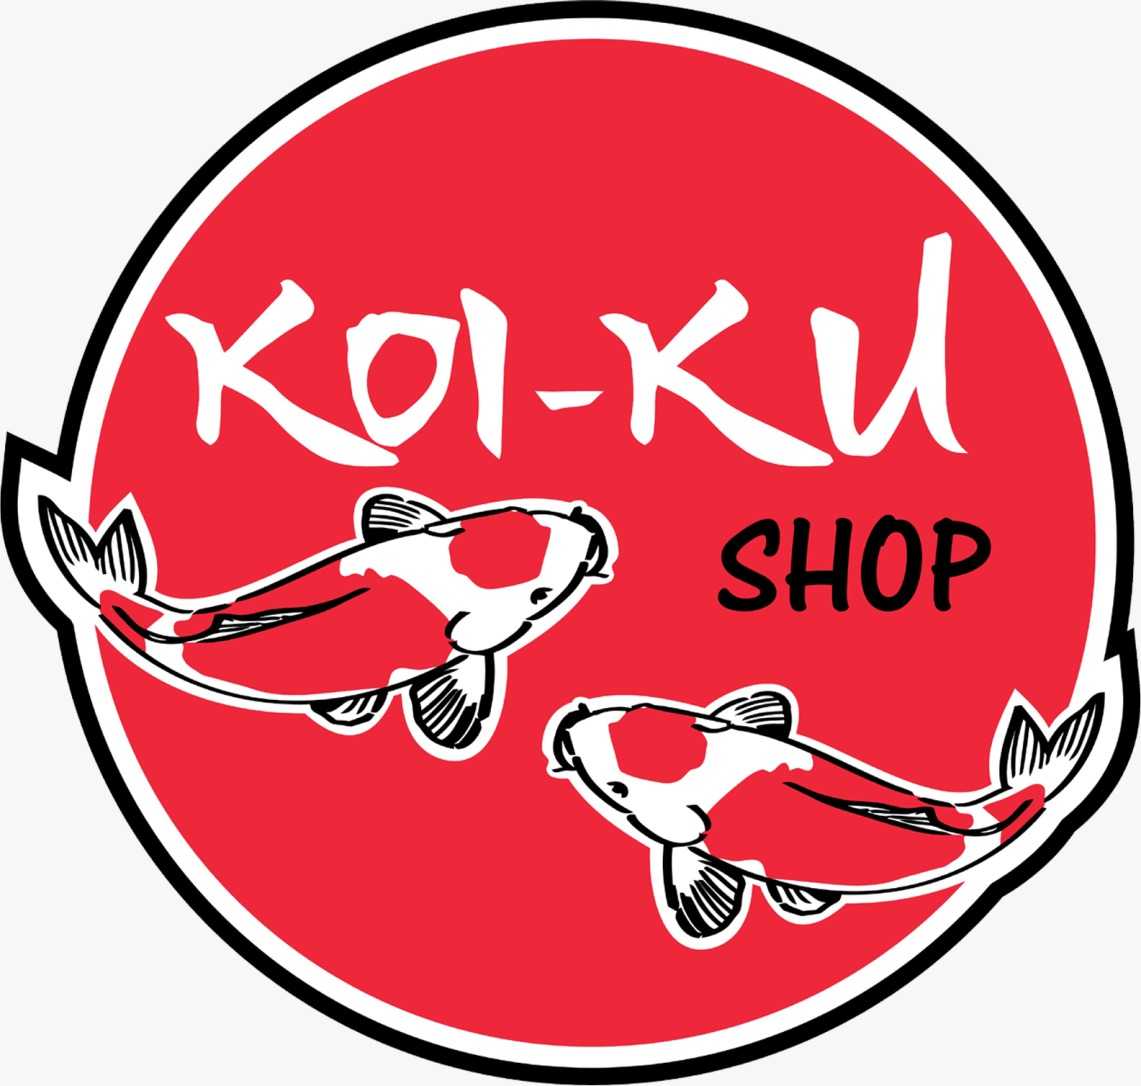 Koi-ku shop